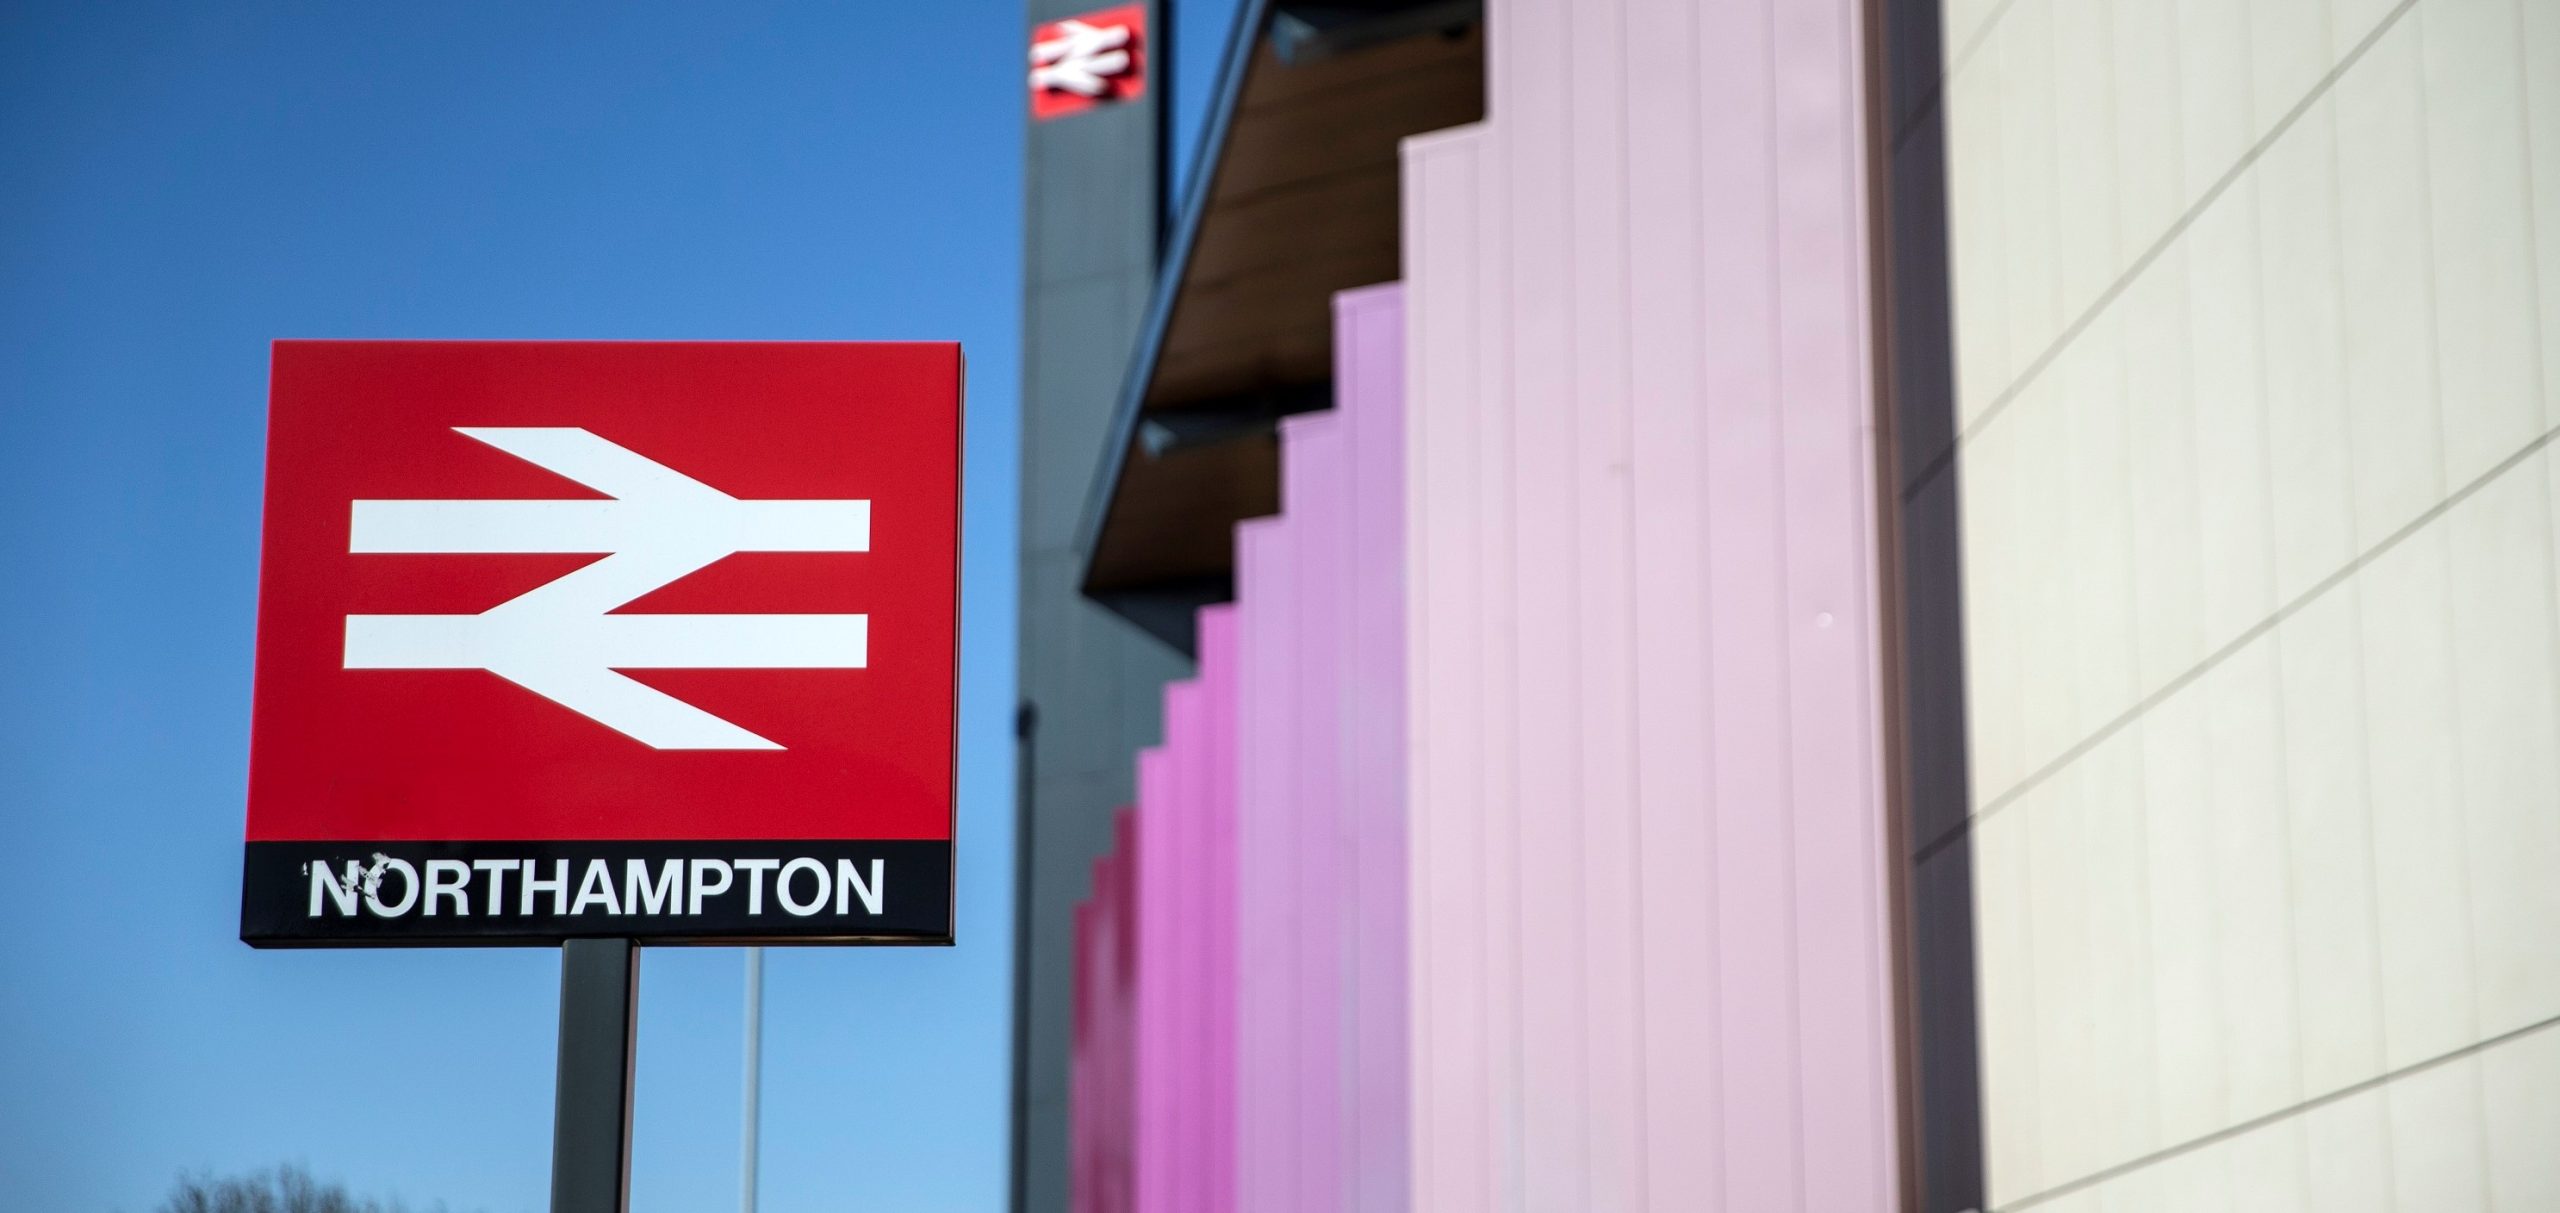 Northampton Train Station - transport and connectivity